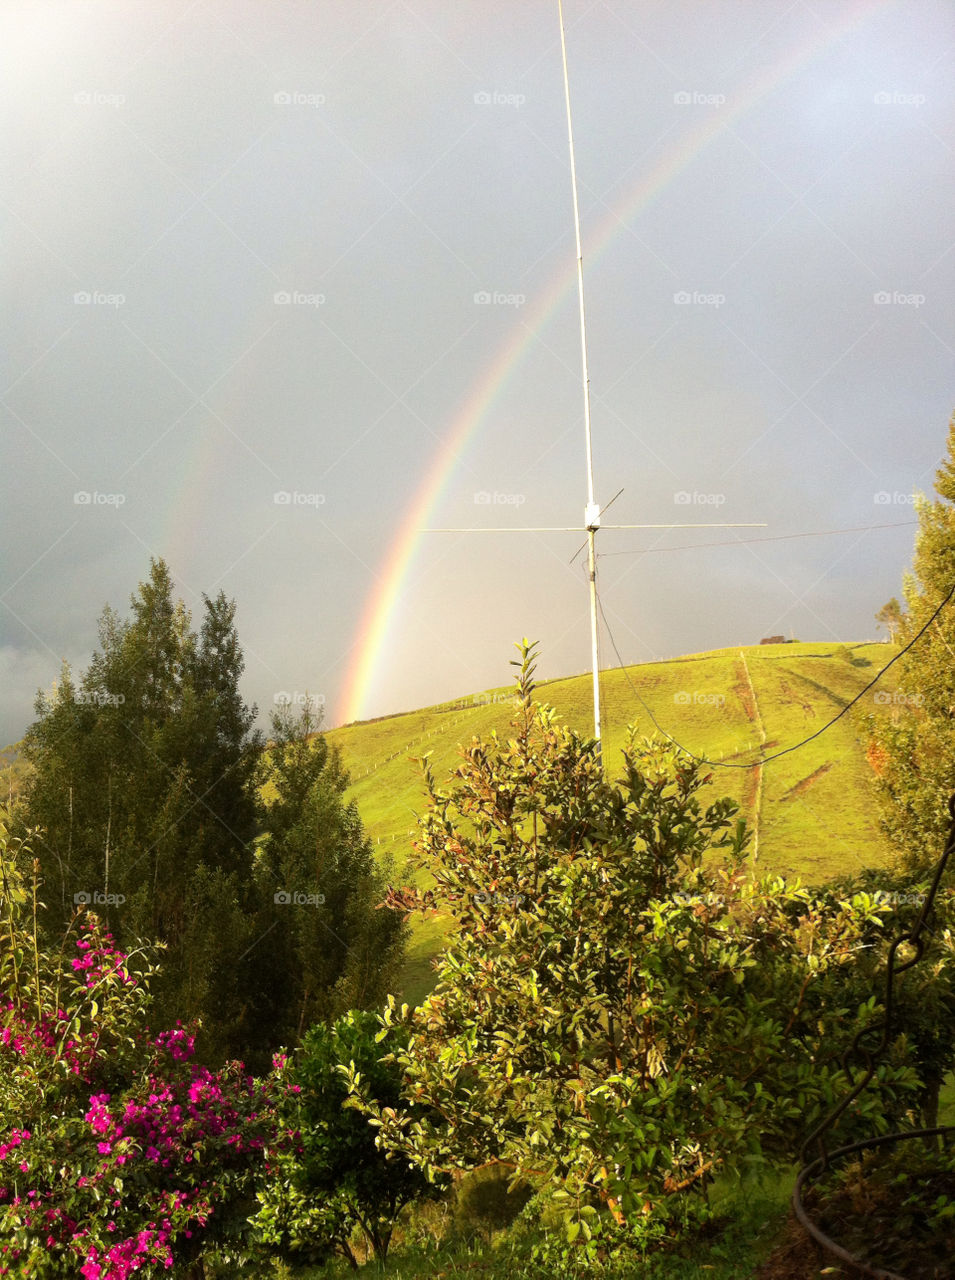 marinilla antioquia colombia sky view green mountain beautifull rainbow by alejin05